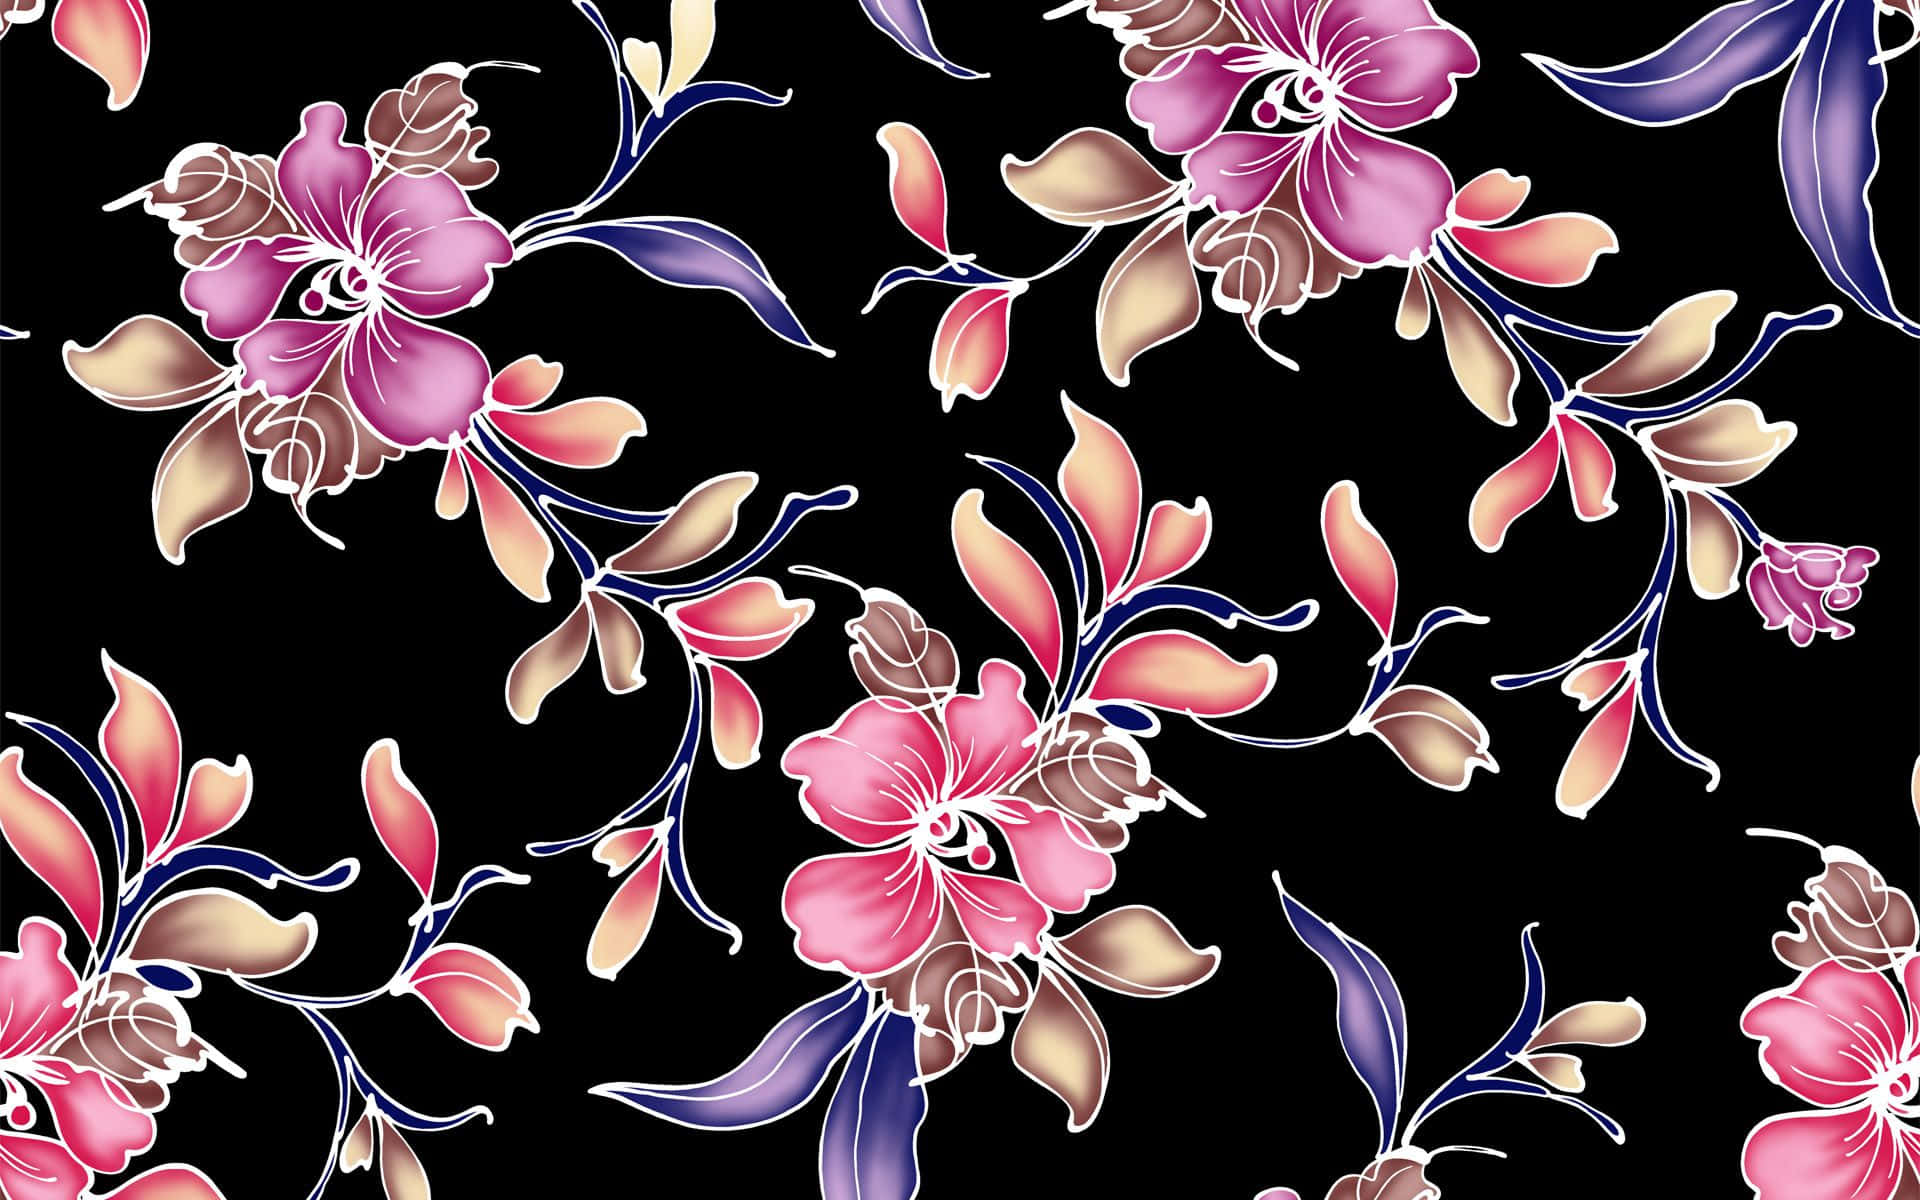 100+] Floral Pattern Backgrounds